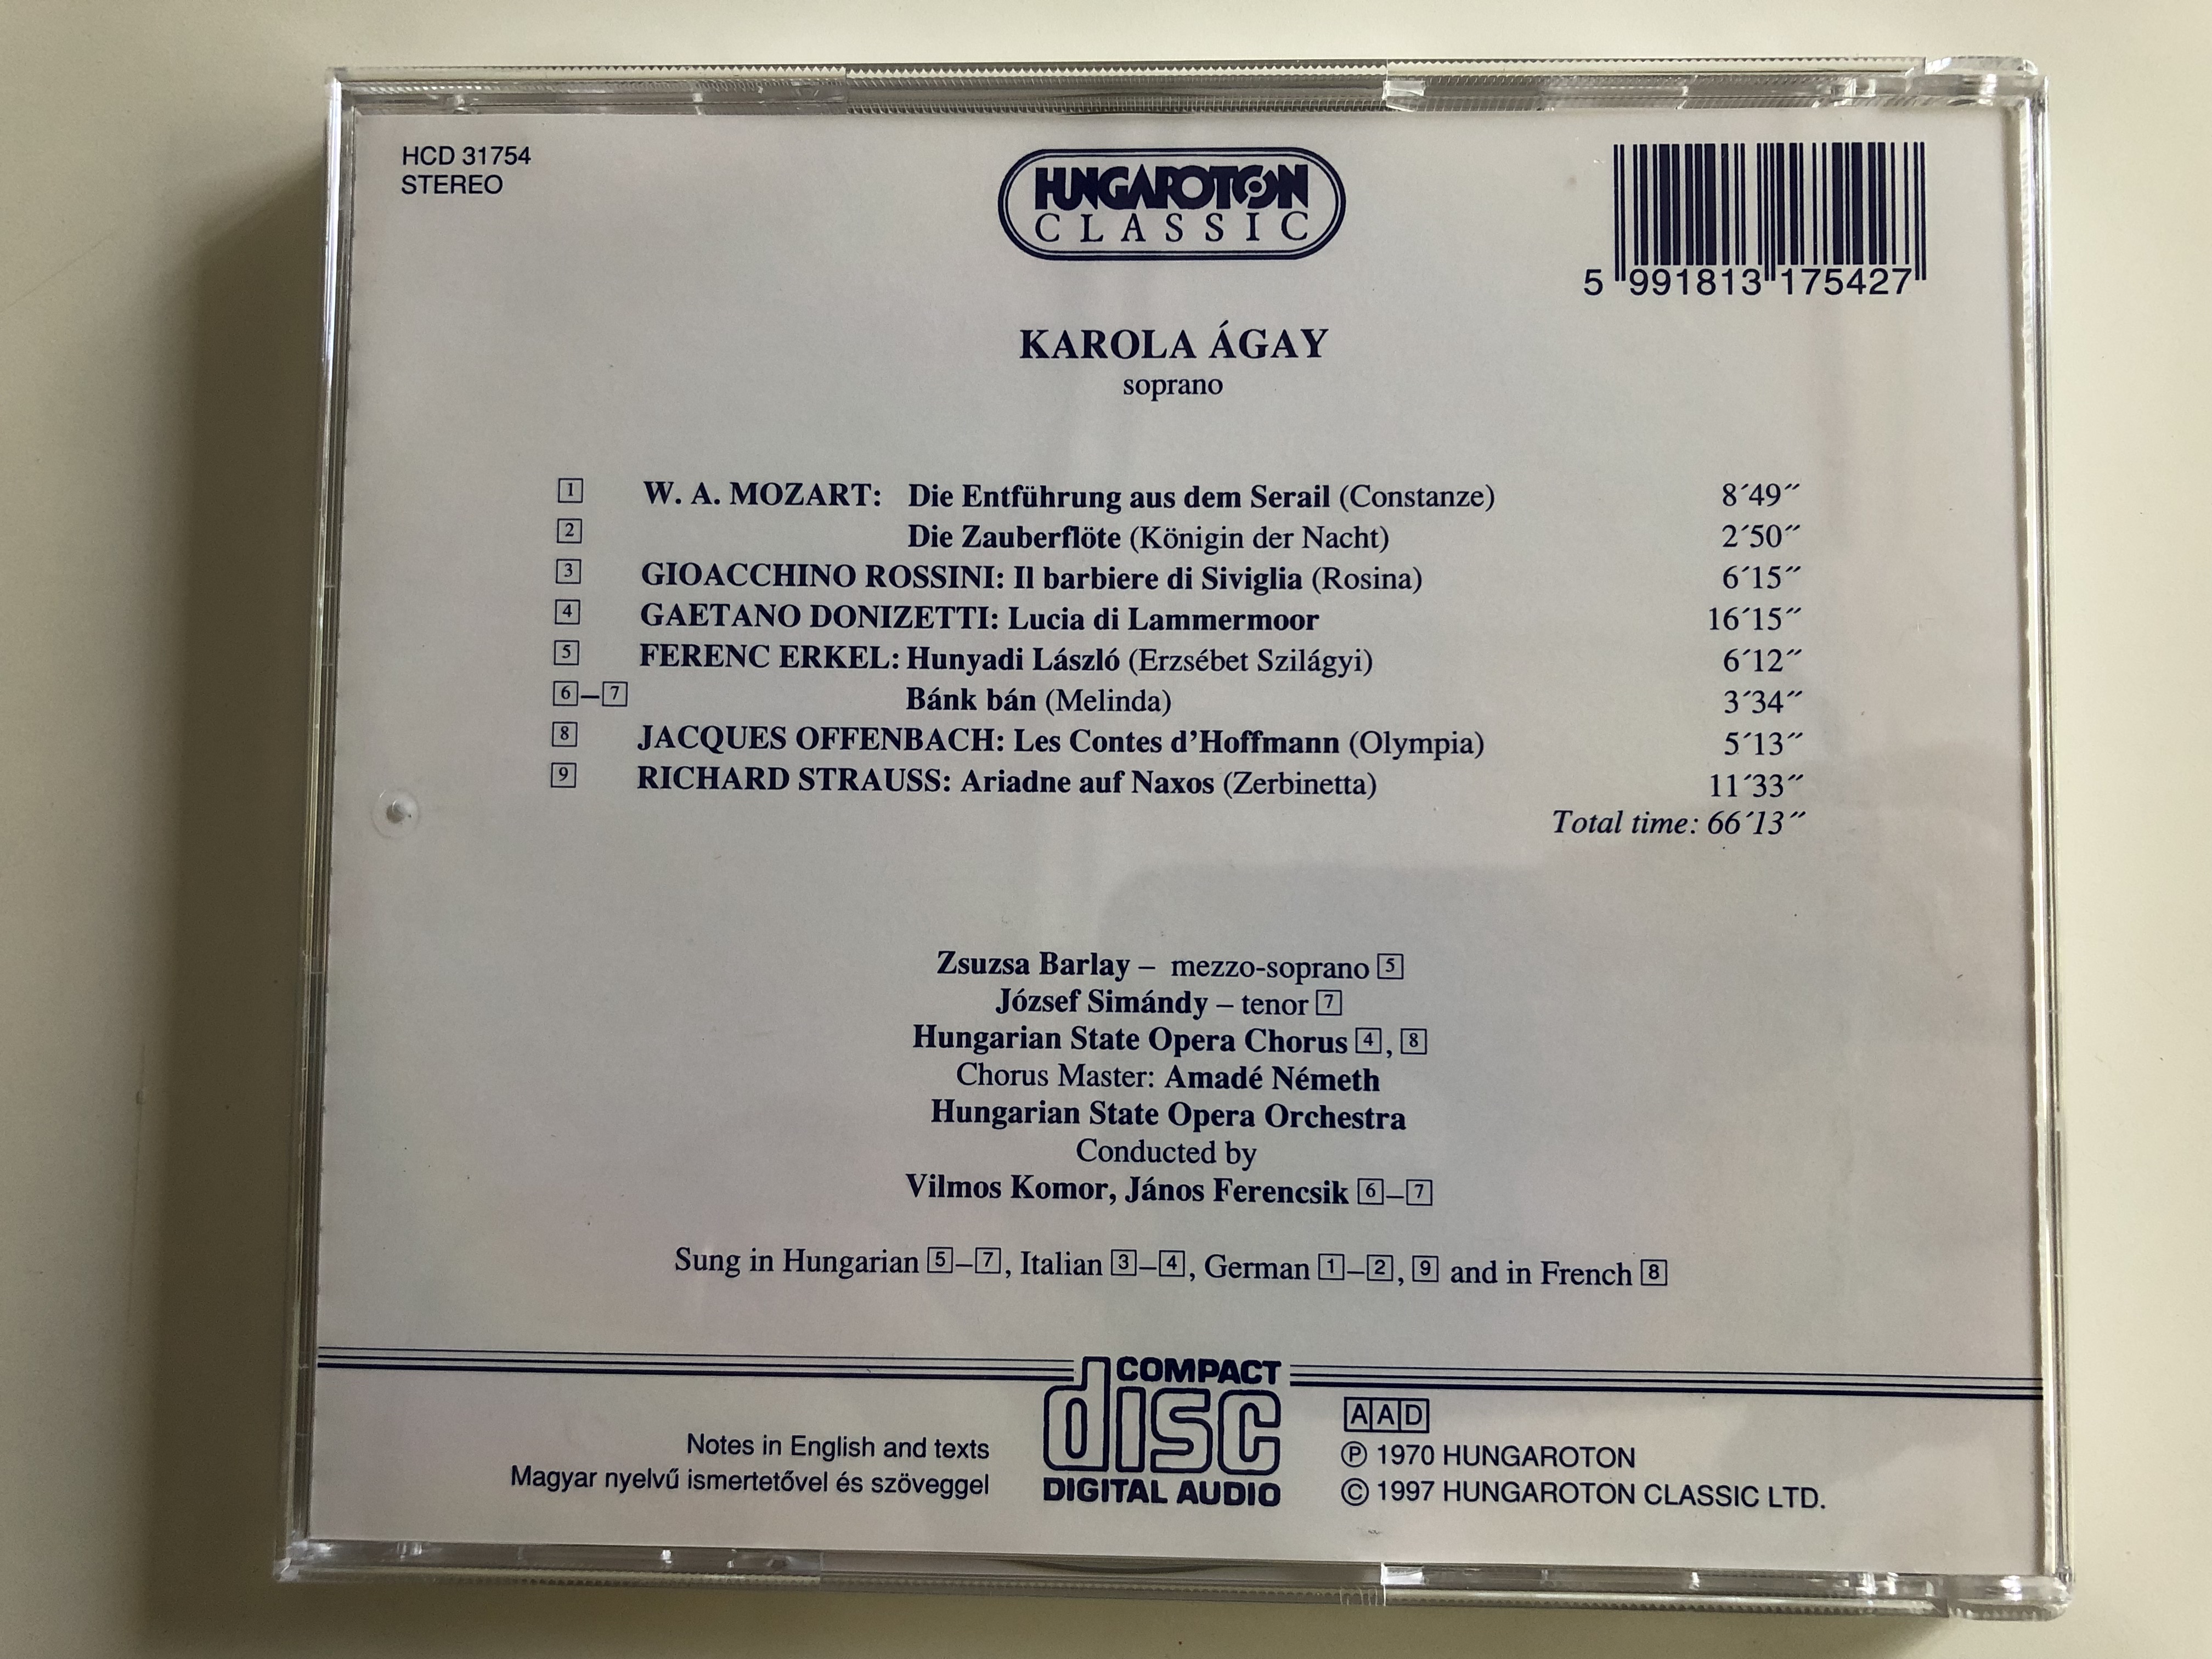 karola-agay-soprano-mozart-rossini-donizetti-offenbach-r.strauss-hungaroton-audio-cd-stereo-1970-hcd-31754-11-.jpg